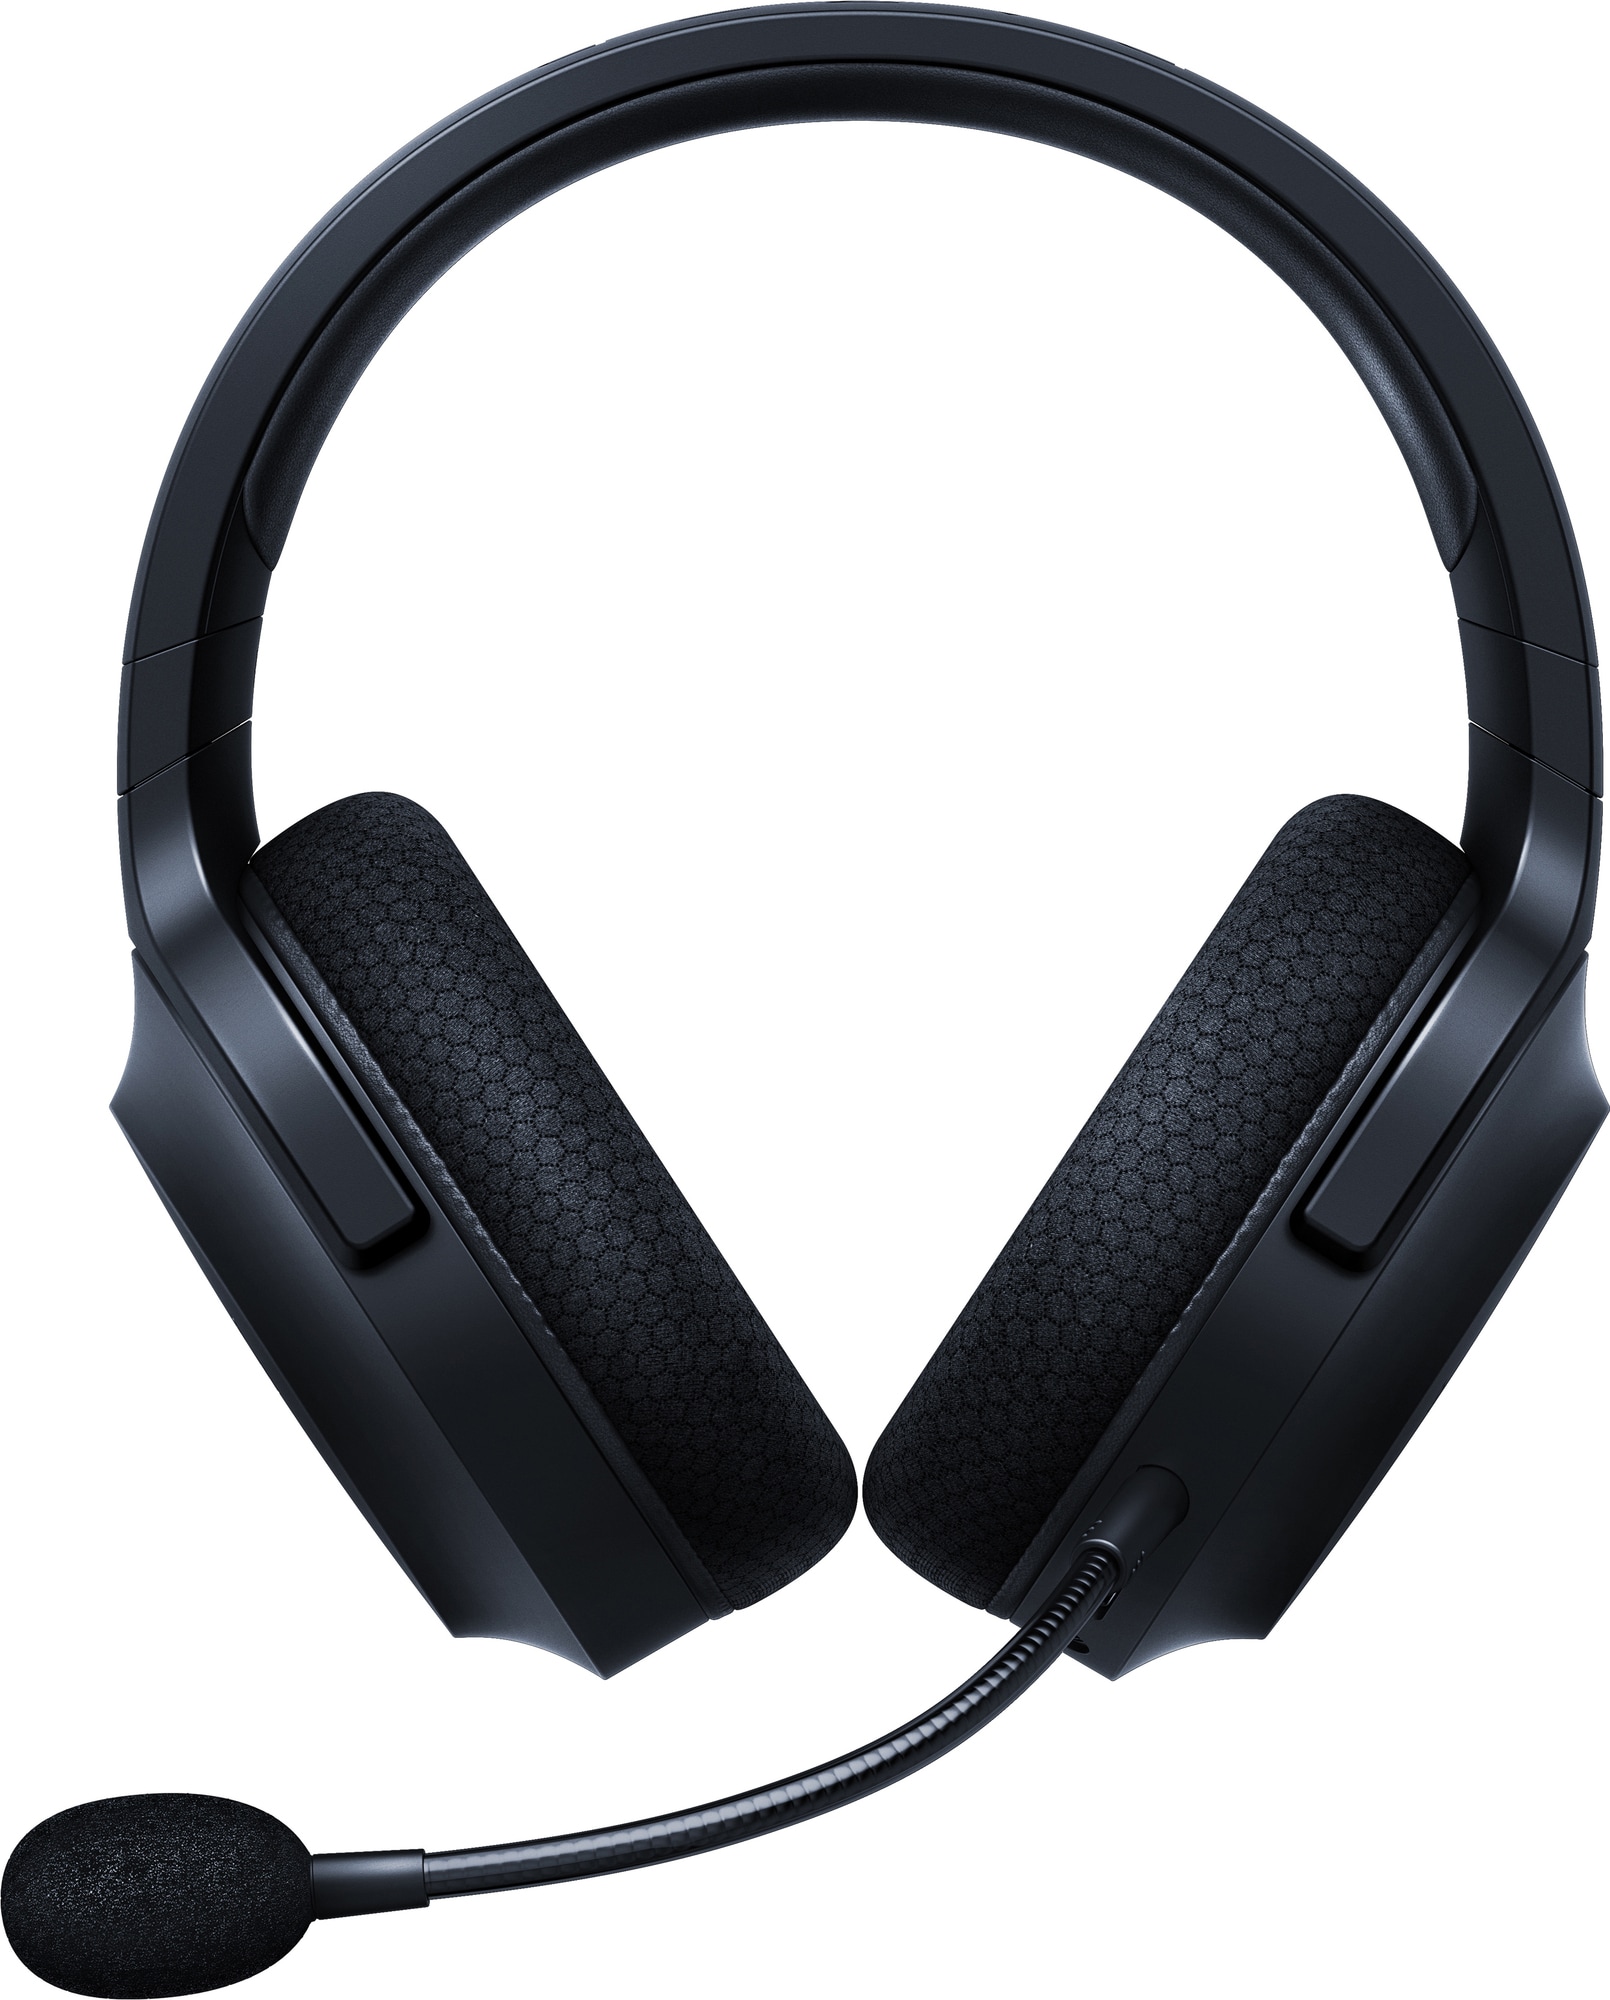 Razer Barracuda X trådløst gaming headset | Elgiganten